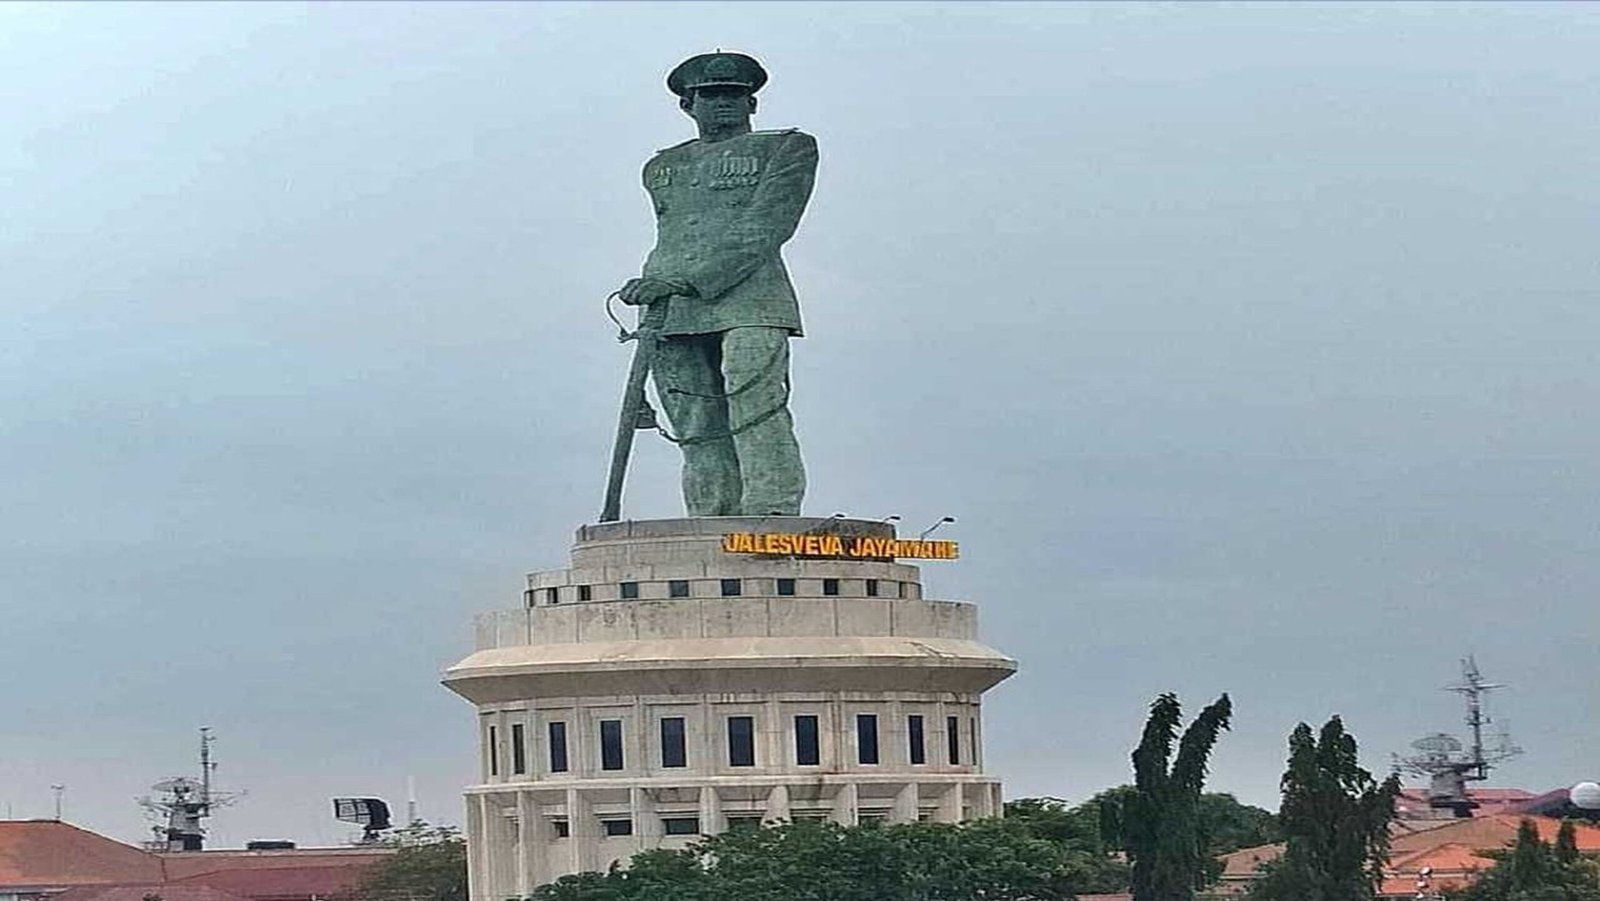 Monumen Jalesveva Jayamahe Wisata Surabaya